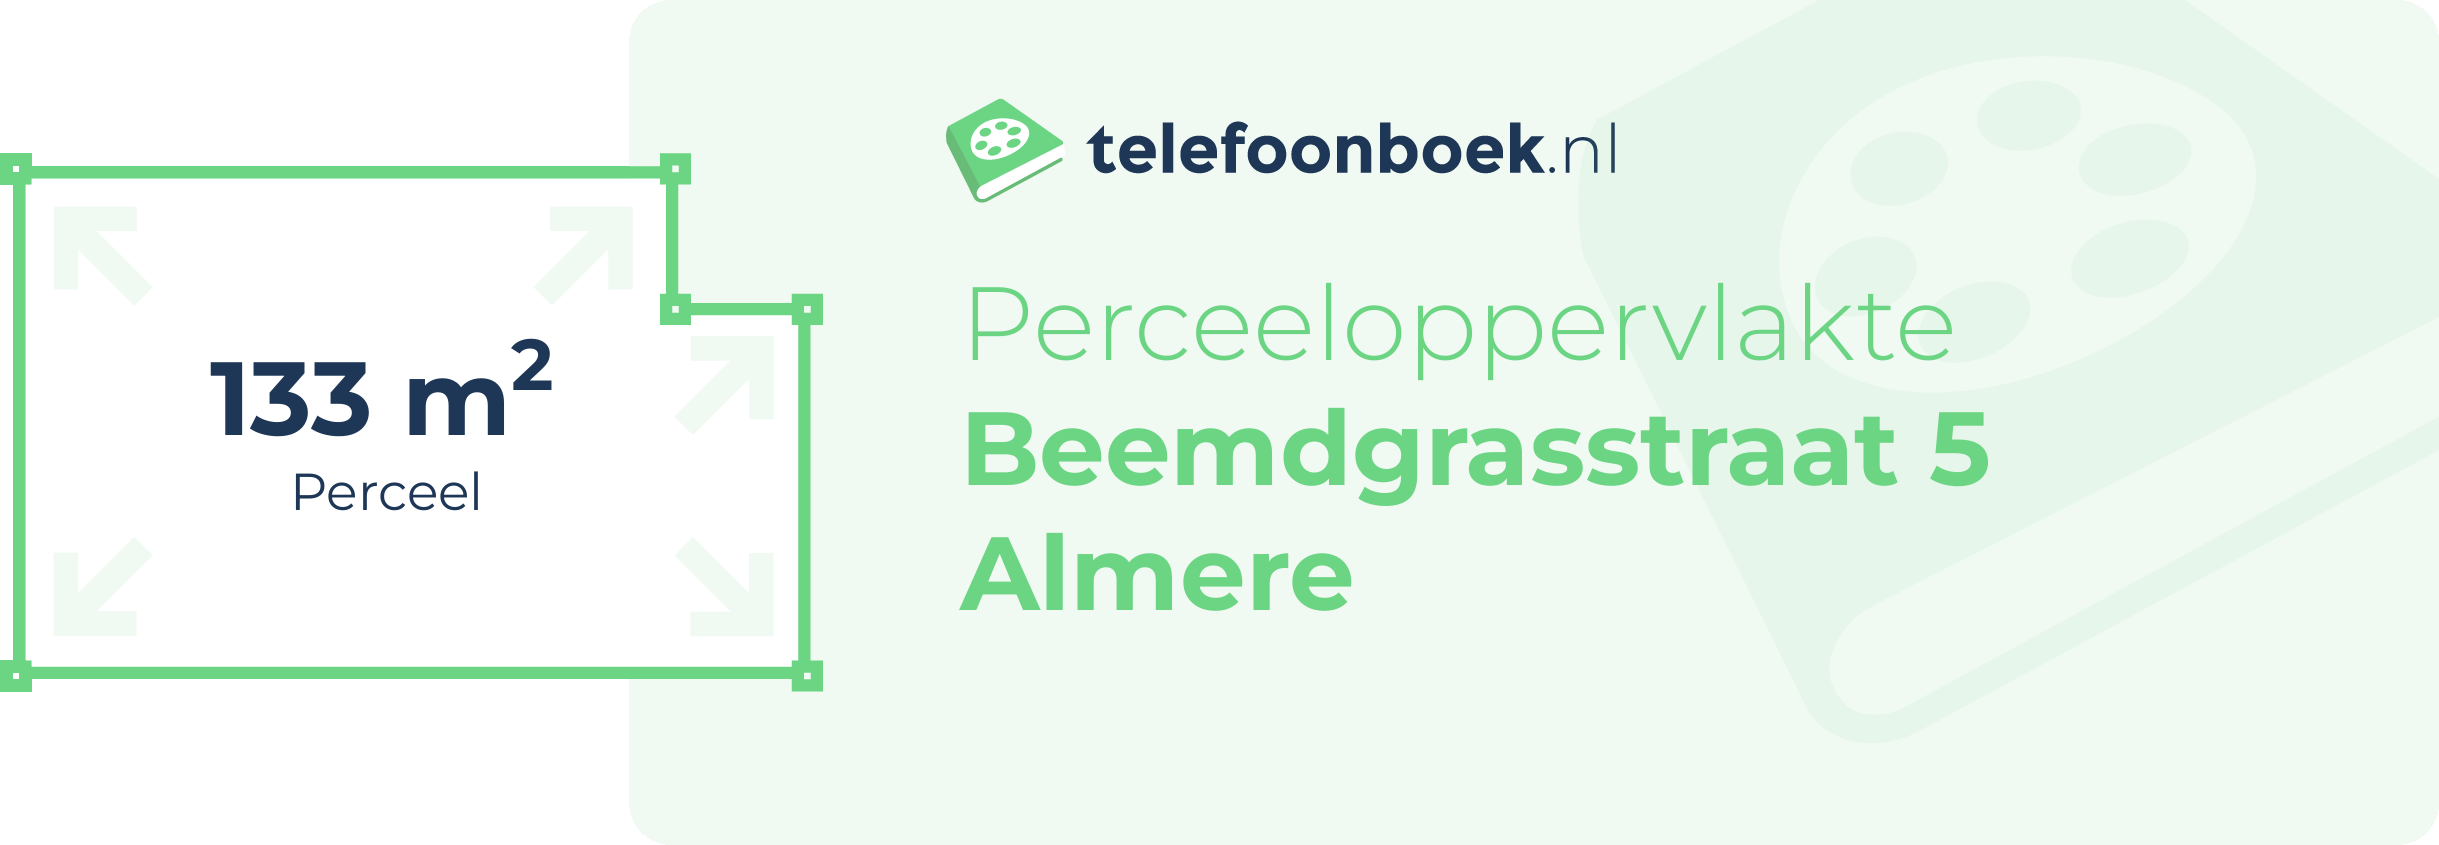 Perceeloppervlakte Beemdgrasstraat 5 Almere